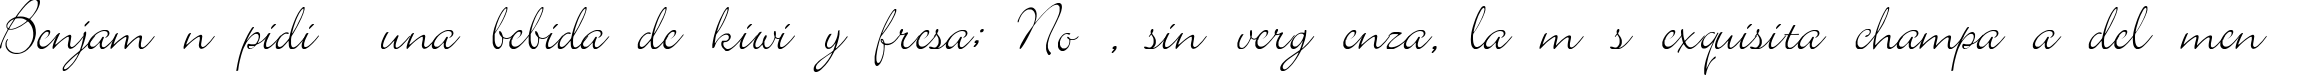 Пример написания шрифтом Elegant текста на испанском